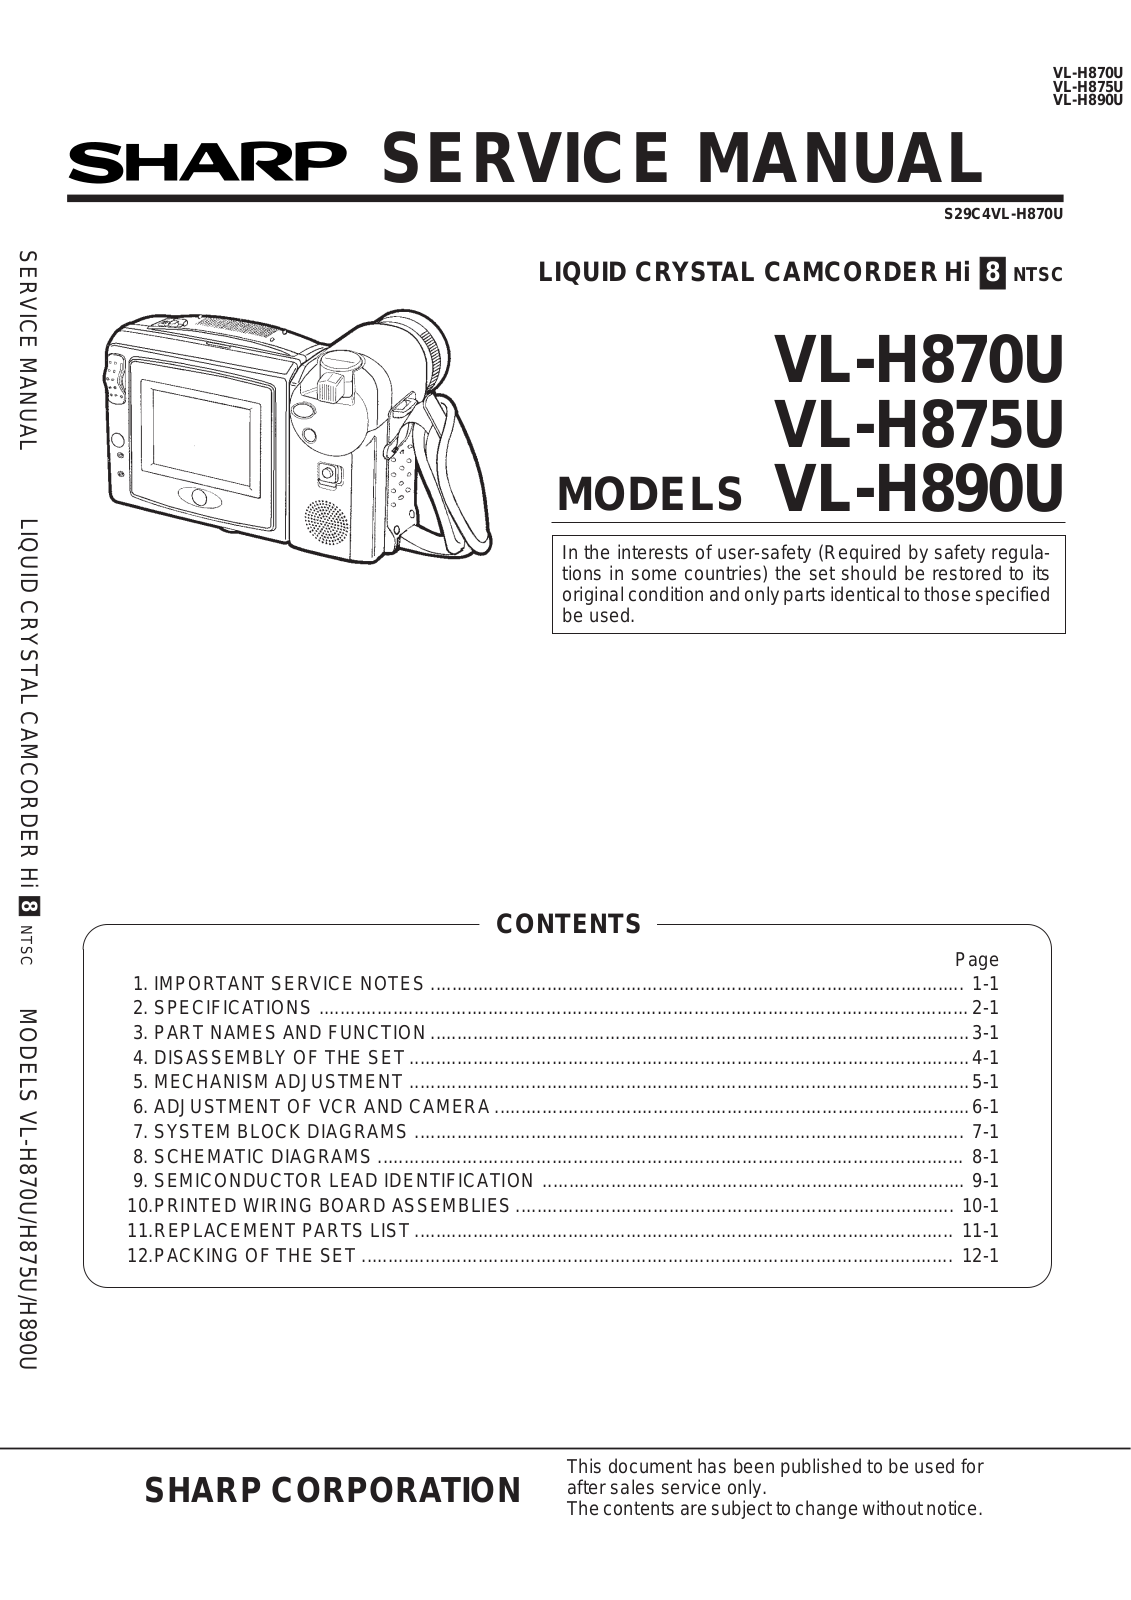 SHARP VLH870, VLH870U, VLH875U, VLH890U Service Manual